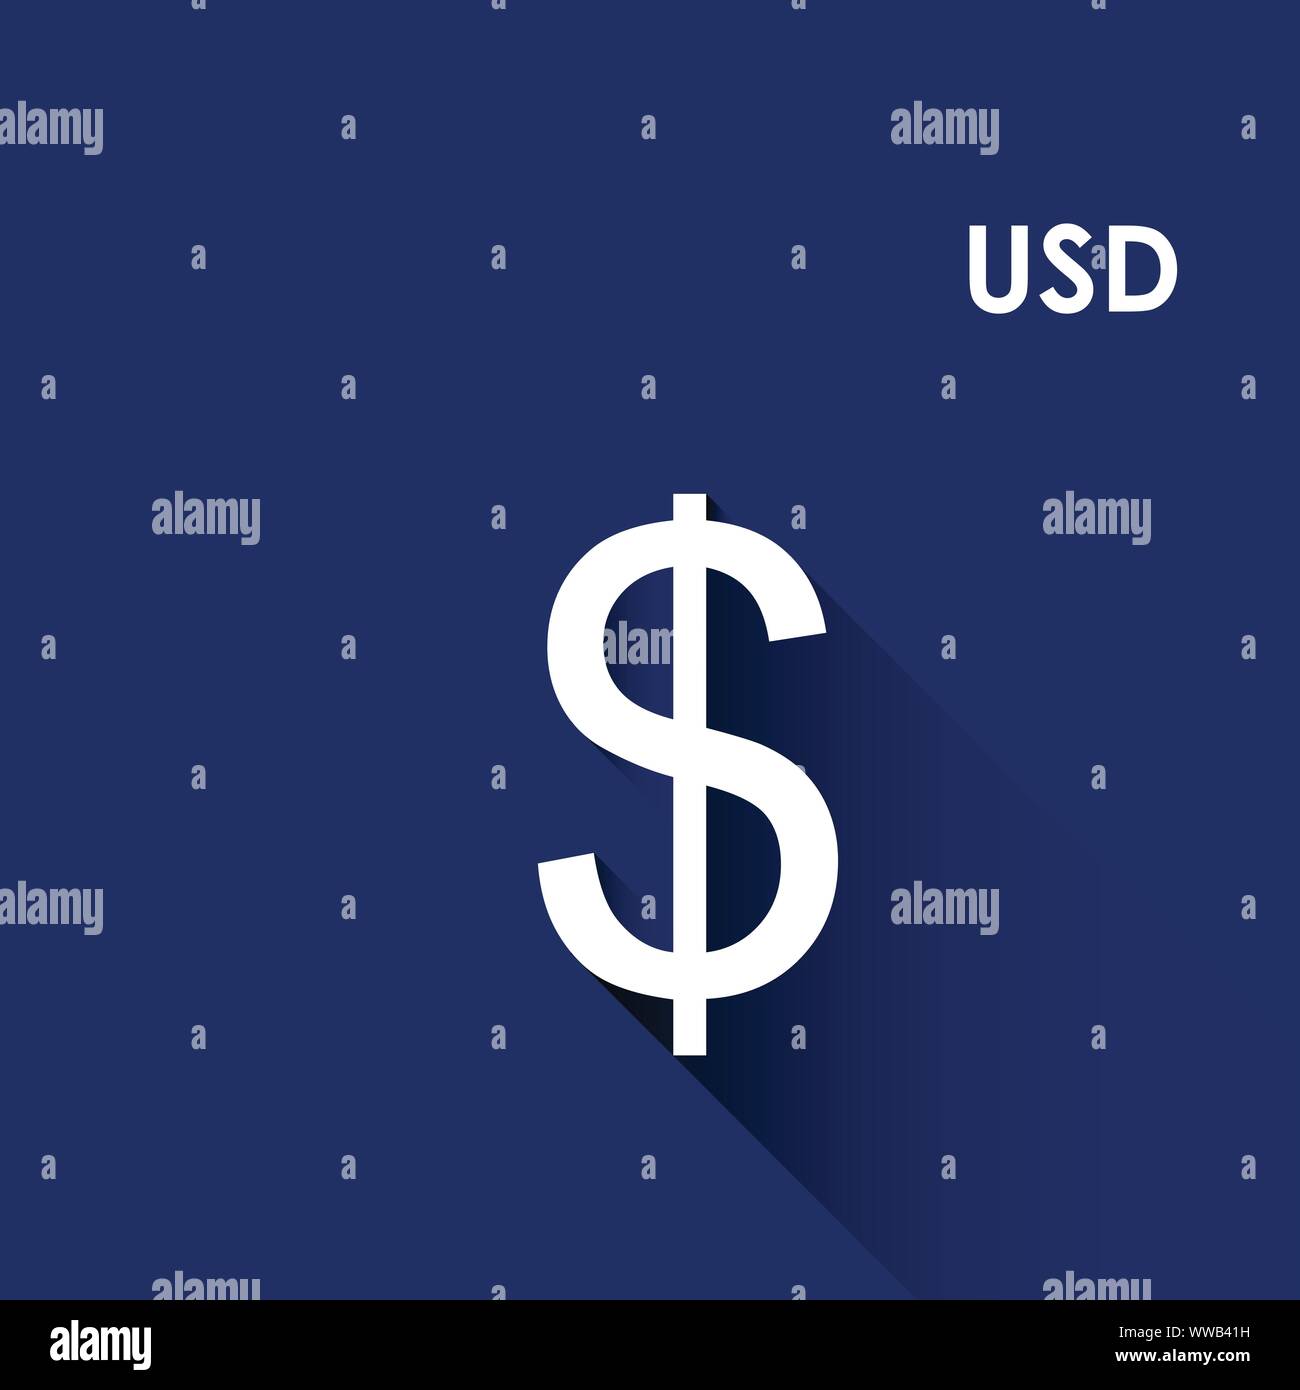 Usd currency symbol (Turkish Usd para birimi simgesi) Stock Vector